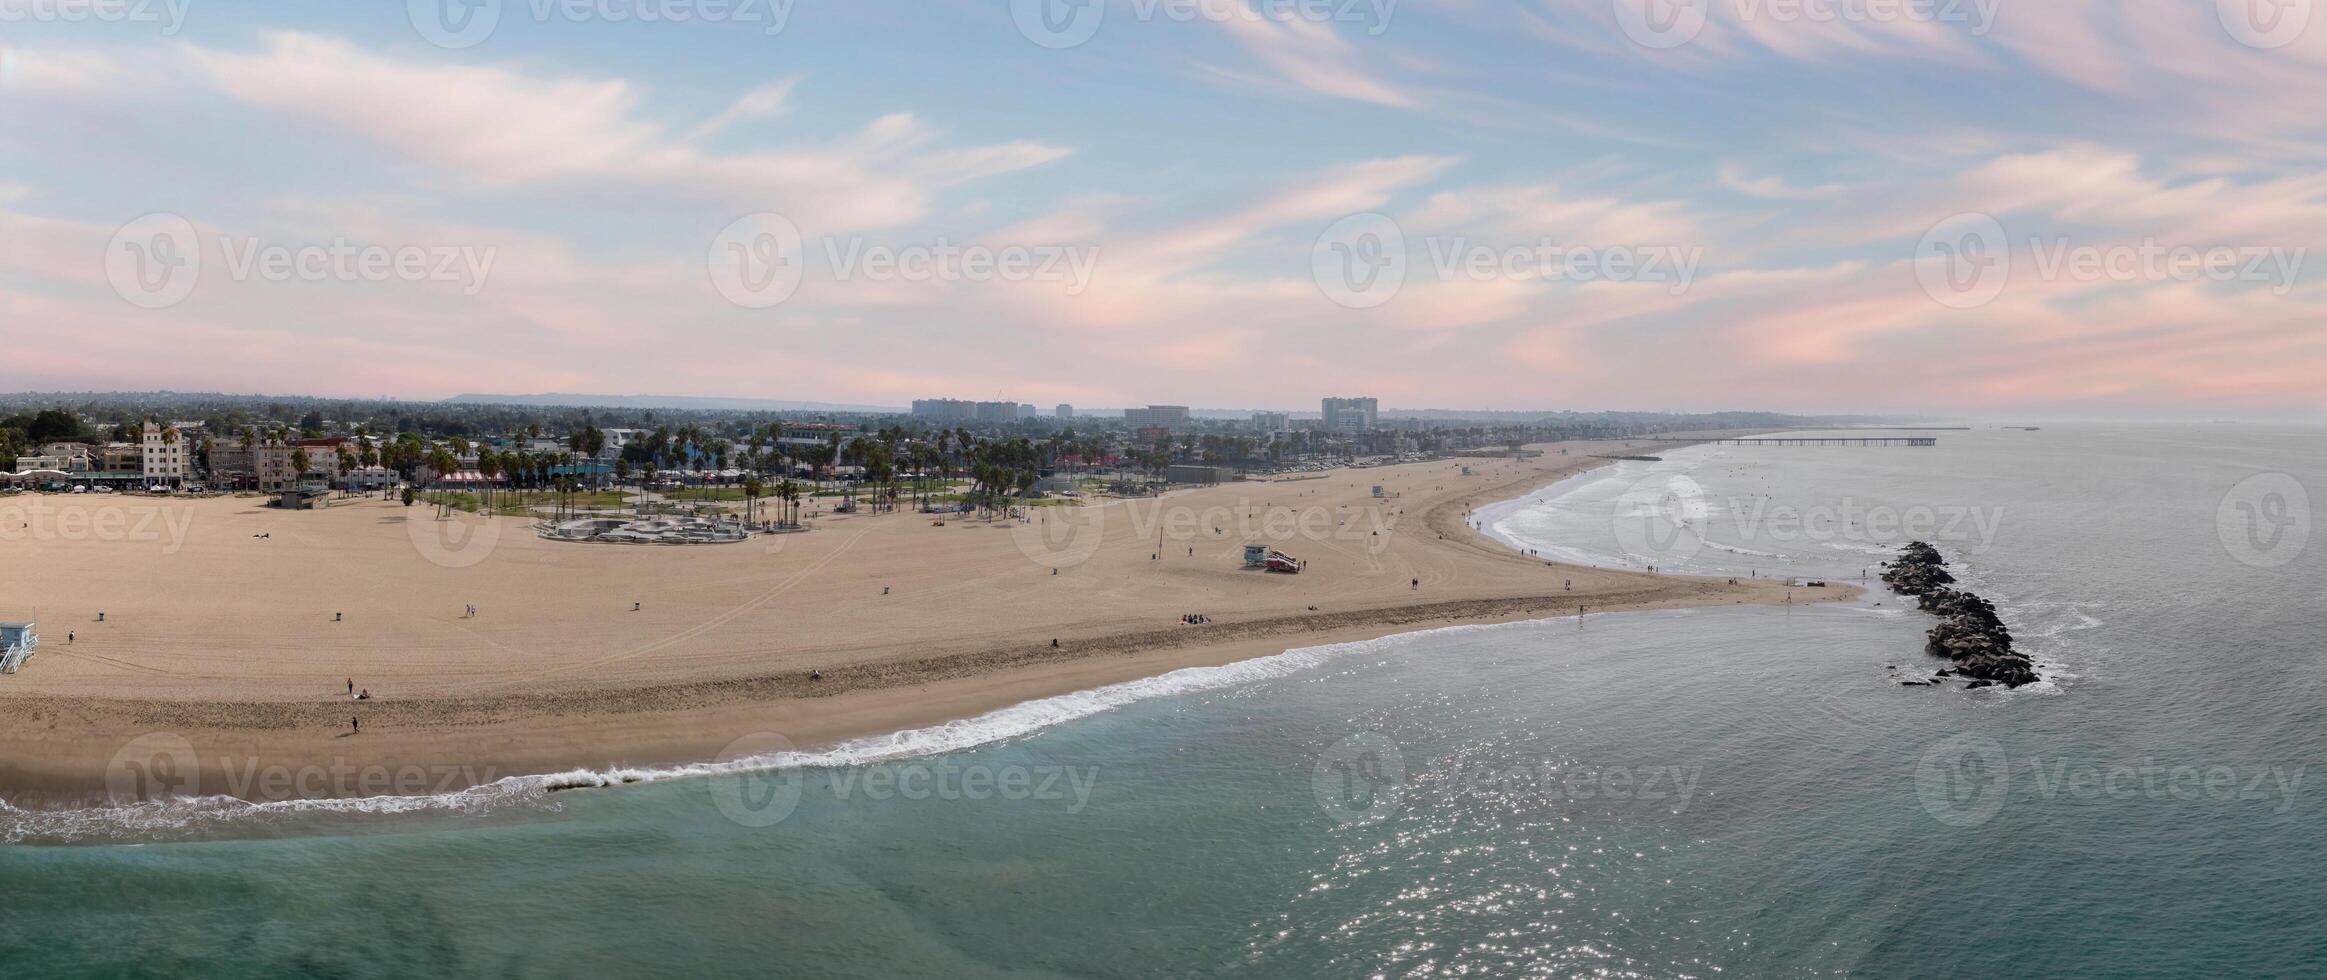 Venice beach Los Angeles California LA Summer Blue Aerial view. photo